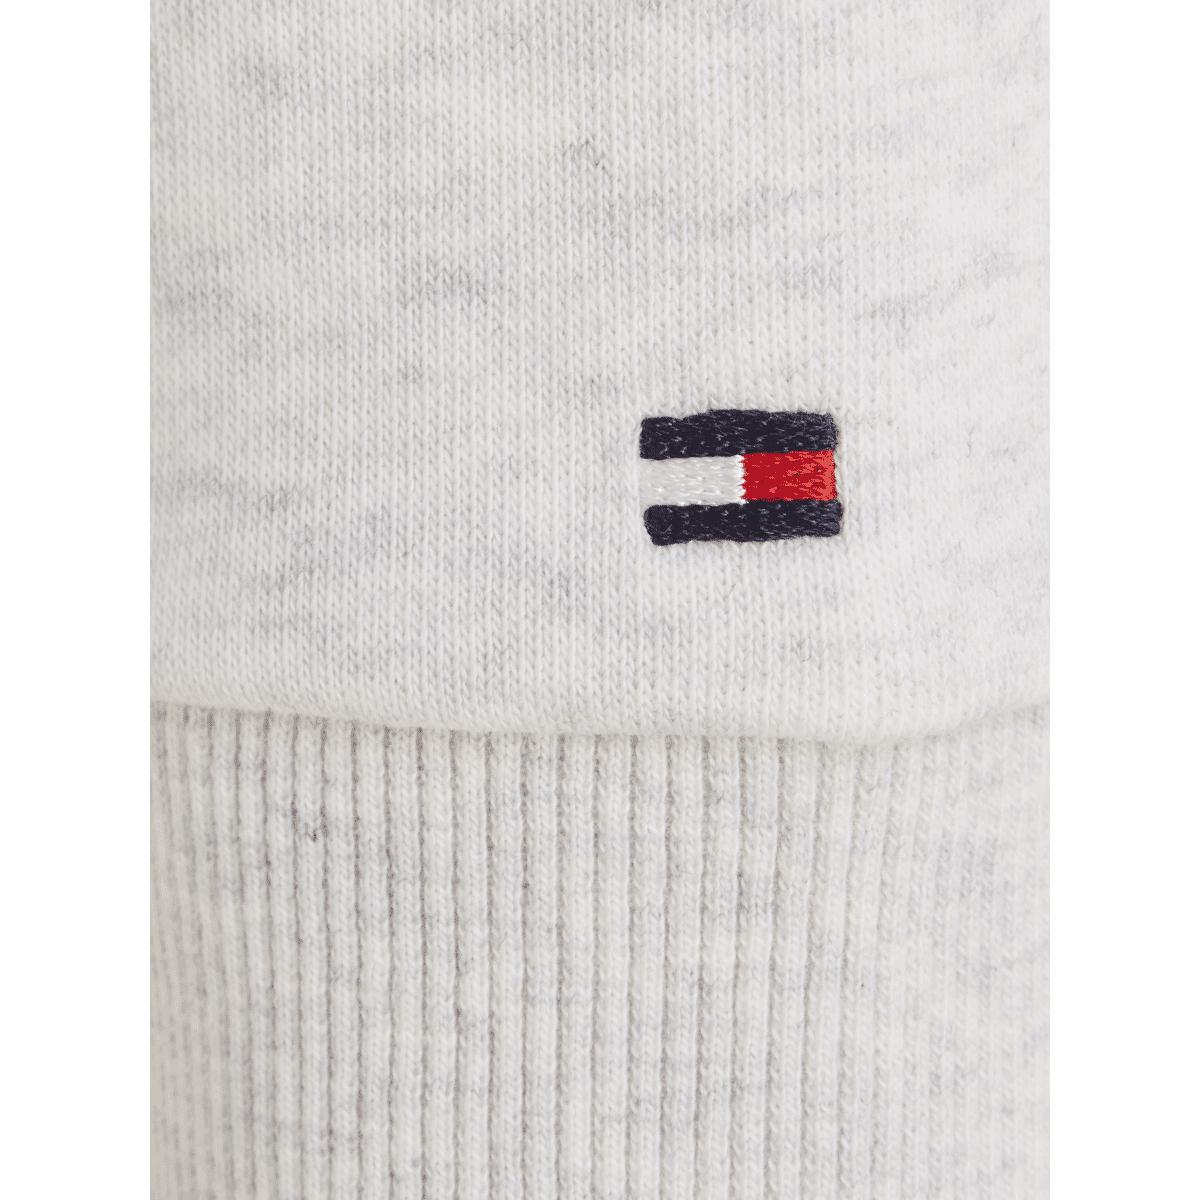 Hilfiger script hoodie close up of Tommy emblem